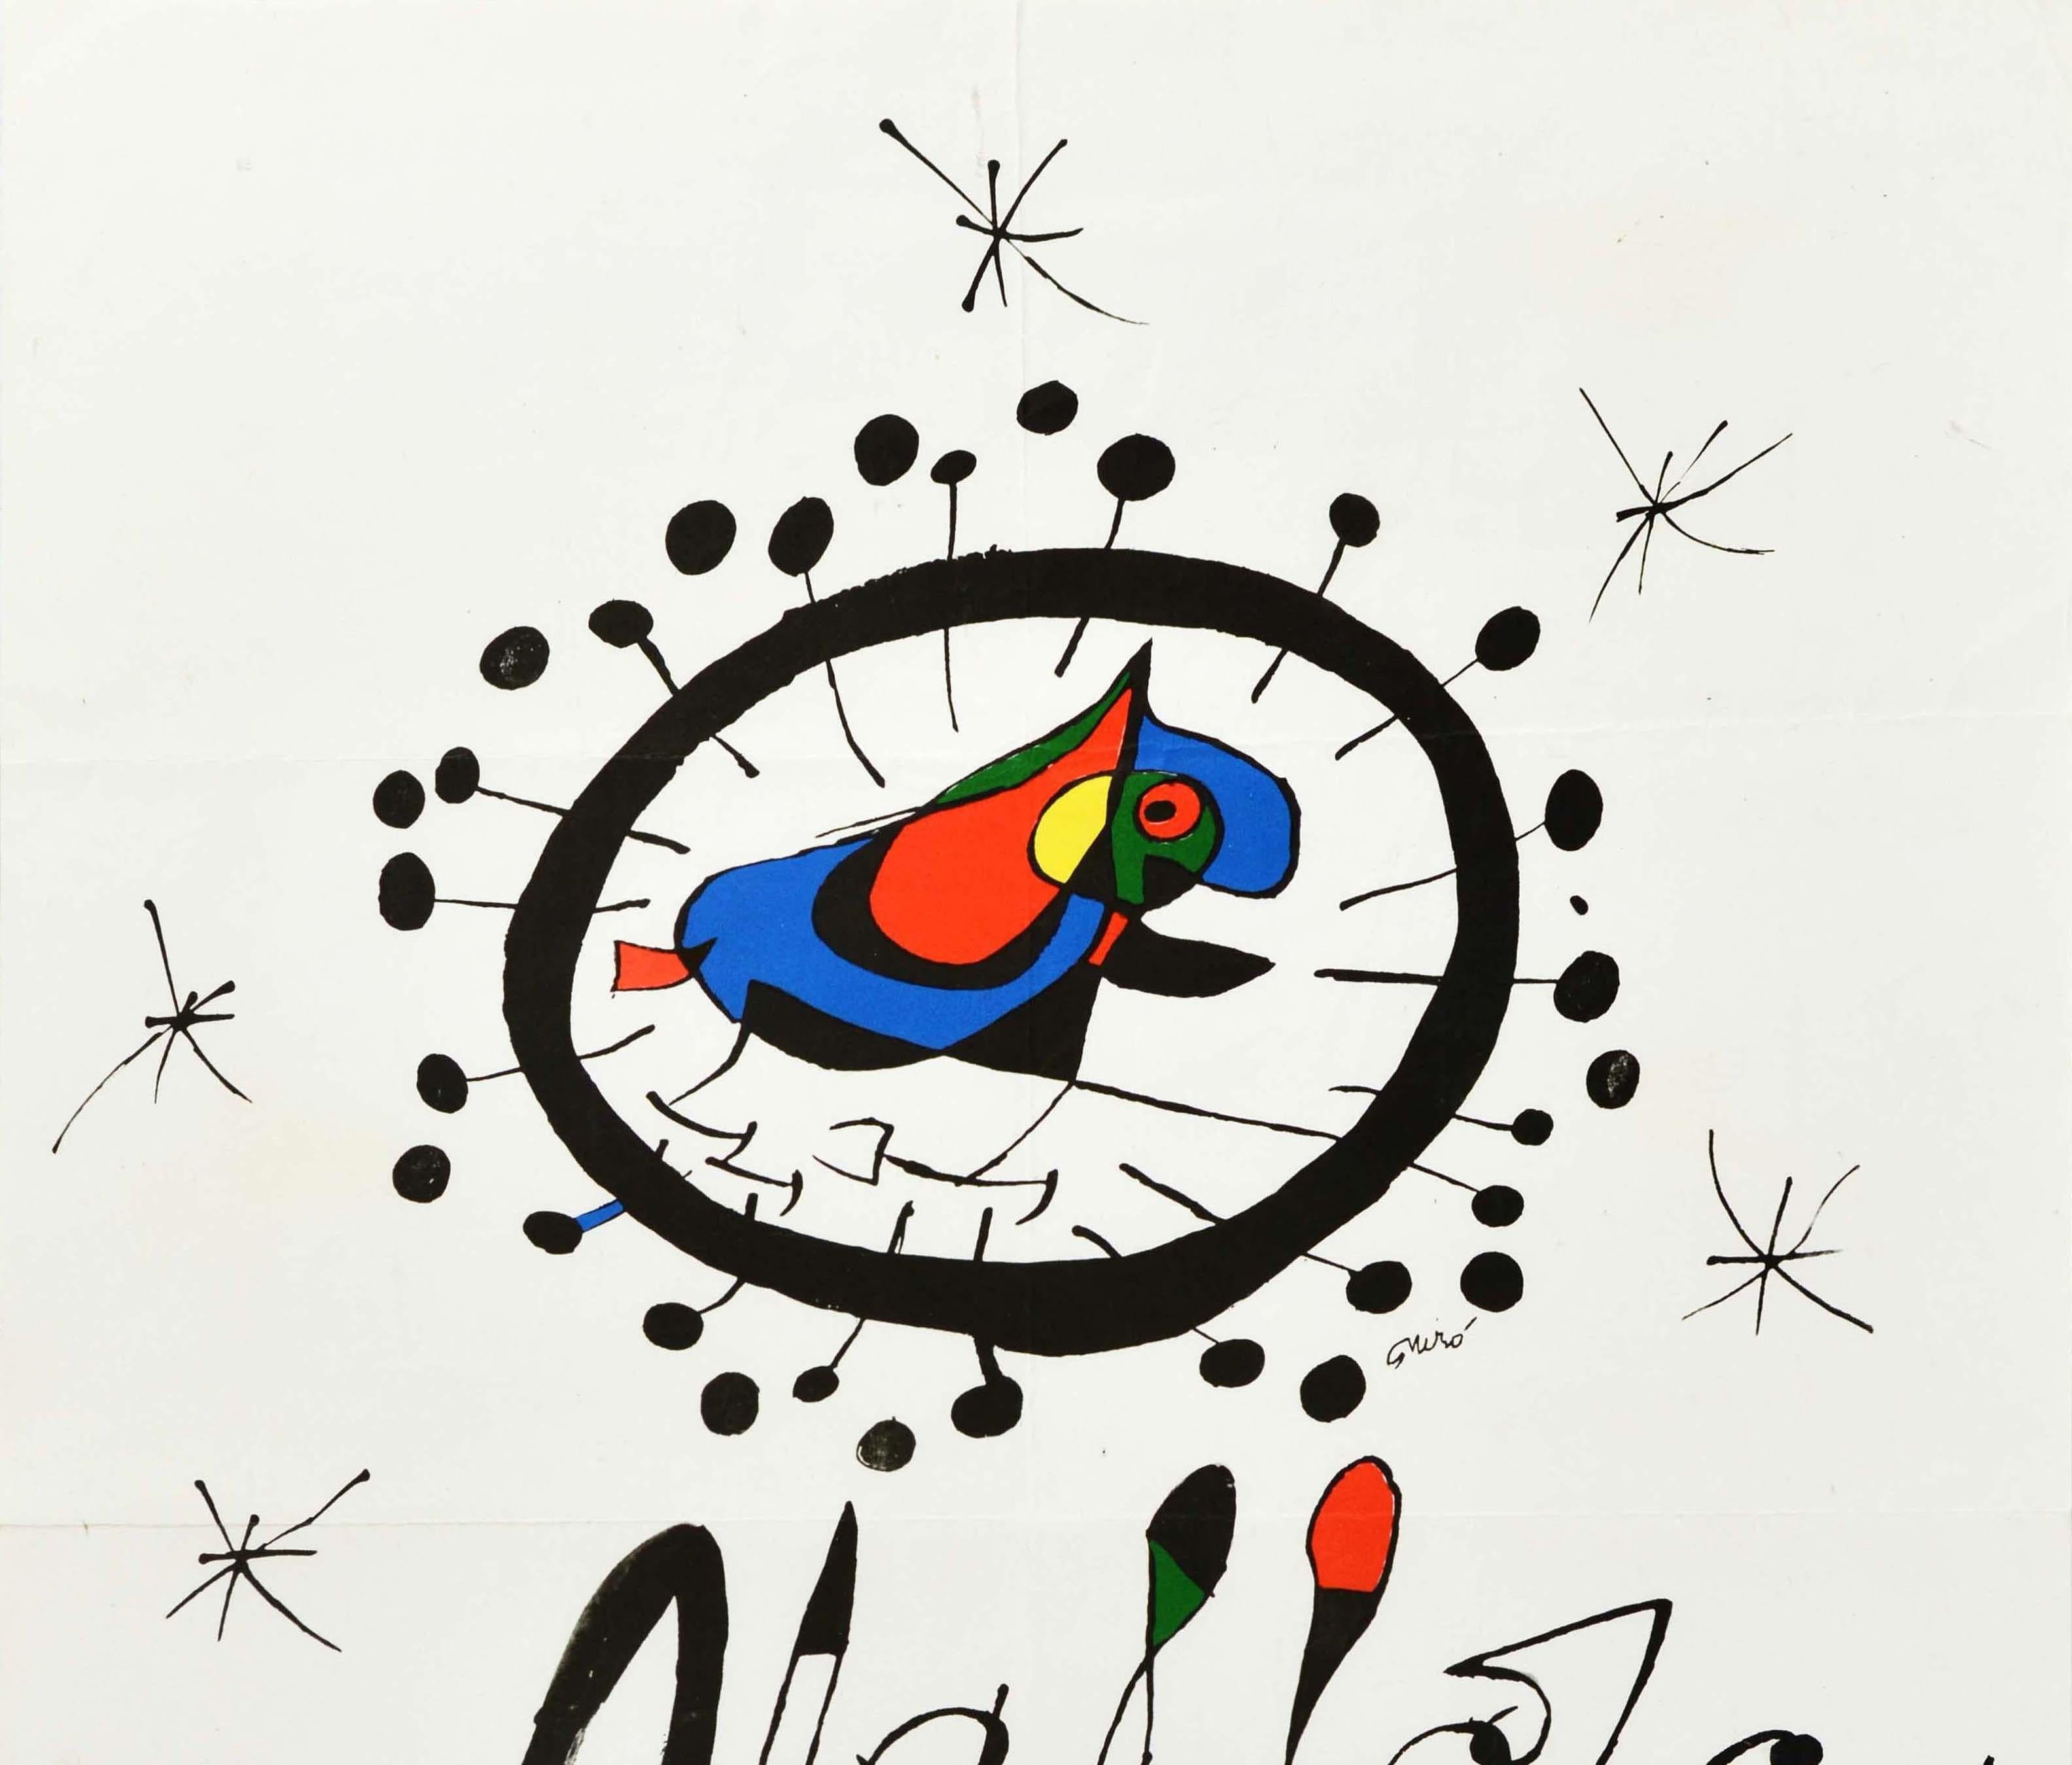 Original vintage travel poster for Mallorca / Majorca Spain featuring a colourful abstract image by the Spanish artist Joan Miro (Joan Miro i Ferra; 1893-1983). Stamp of the Tourist Office Avenido Josa Antonia Palma de Mallorca. Good condition,